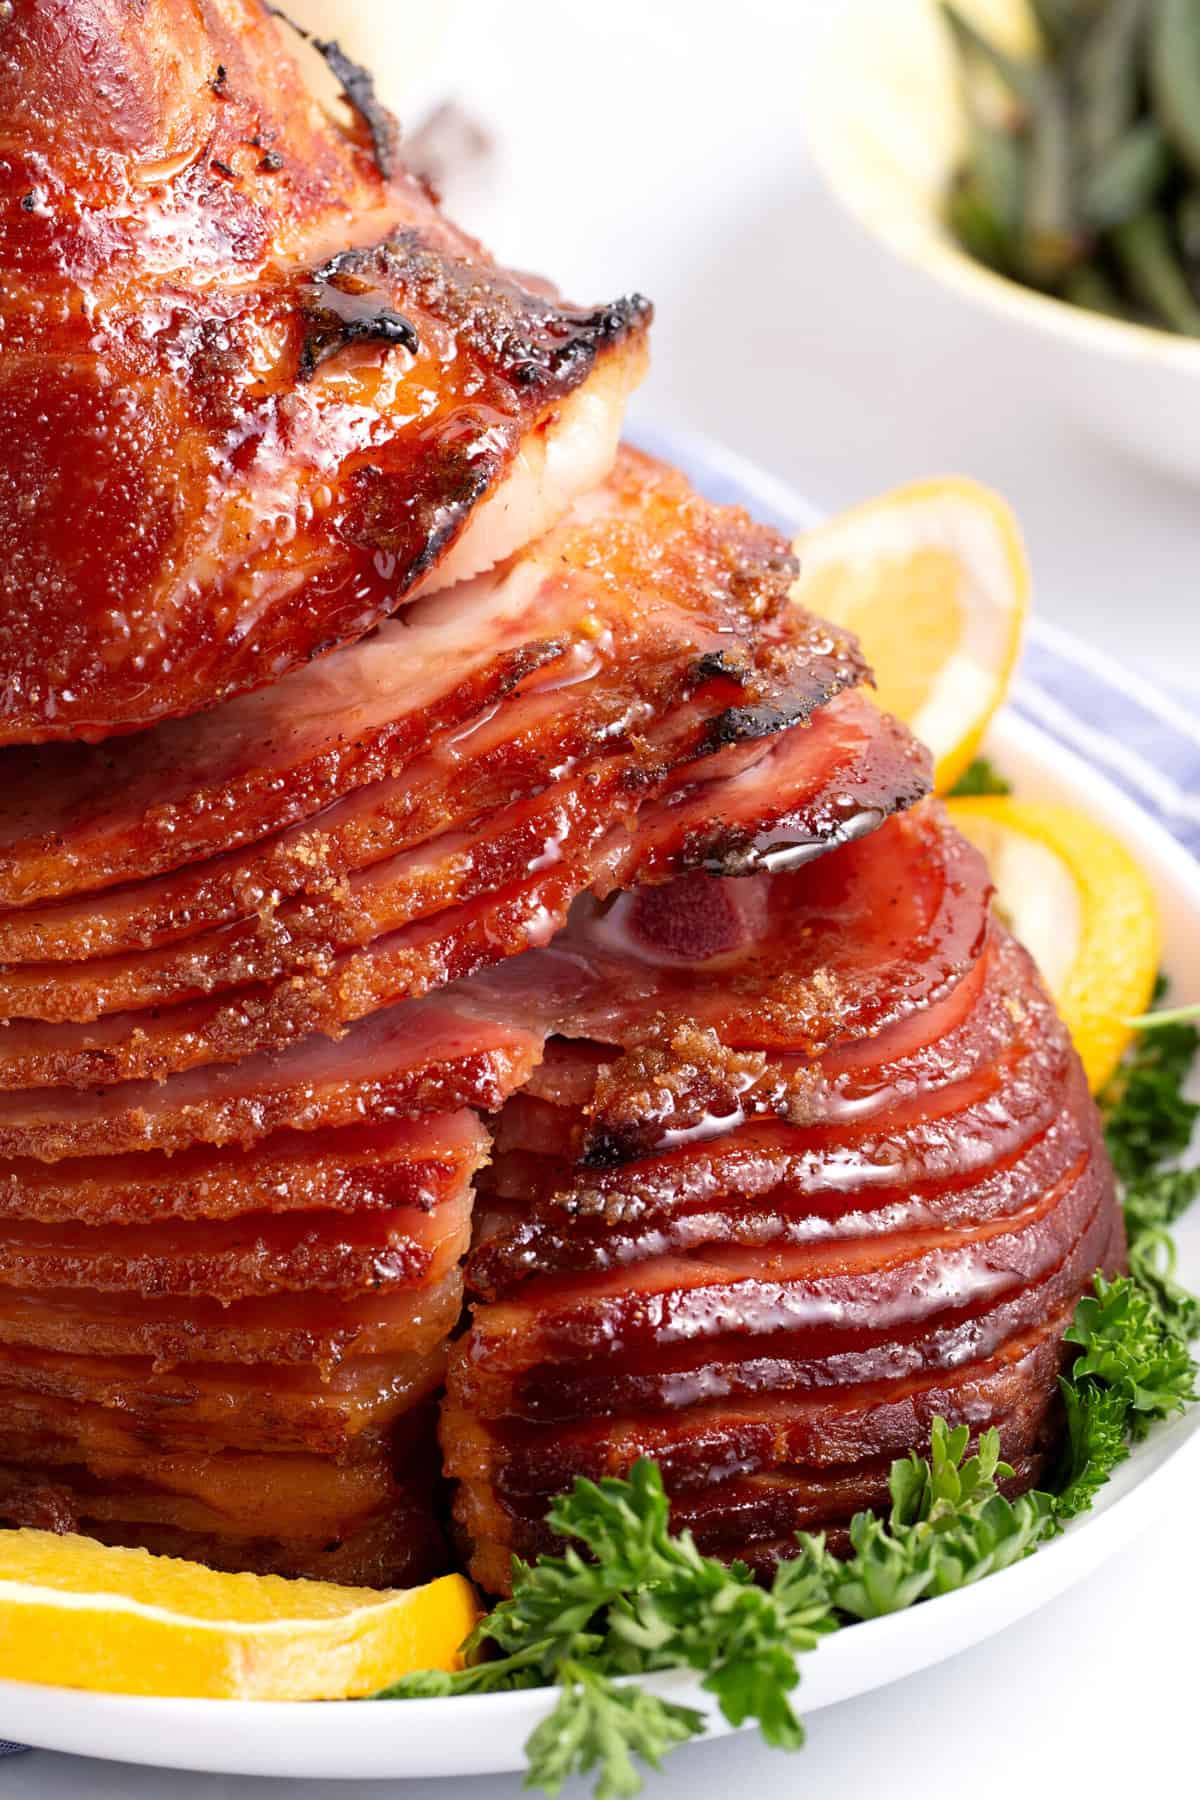 close up image of sliced honey baked ham served on a bed of greens and sliced lemons